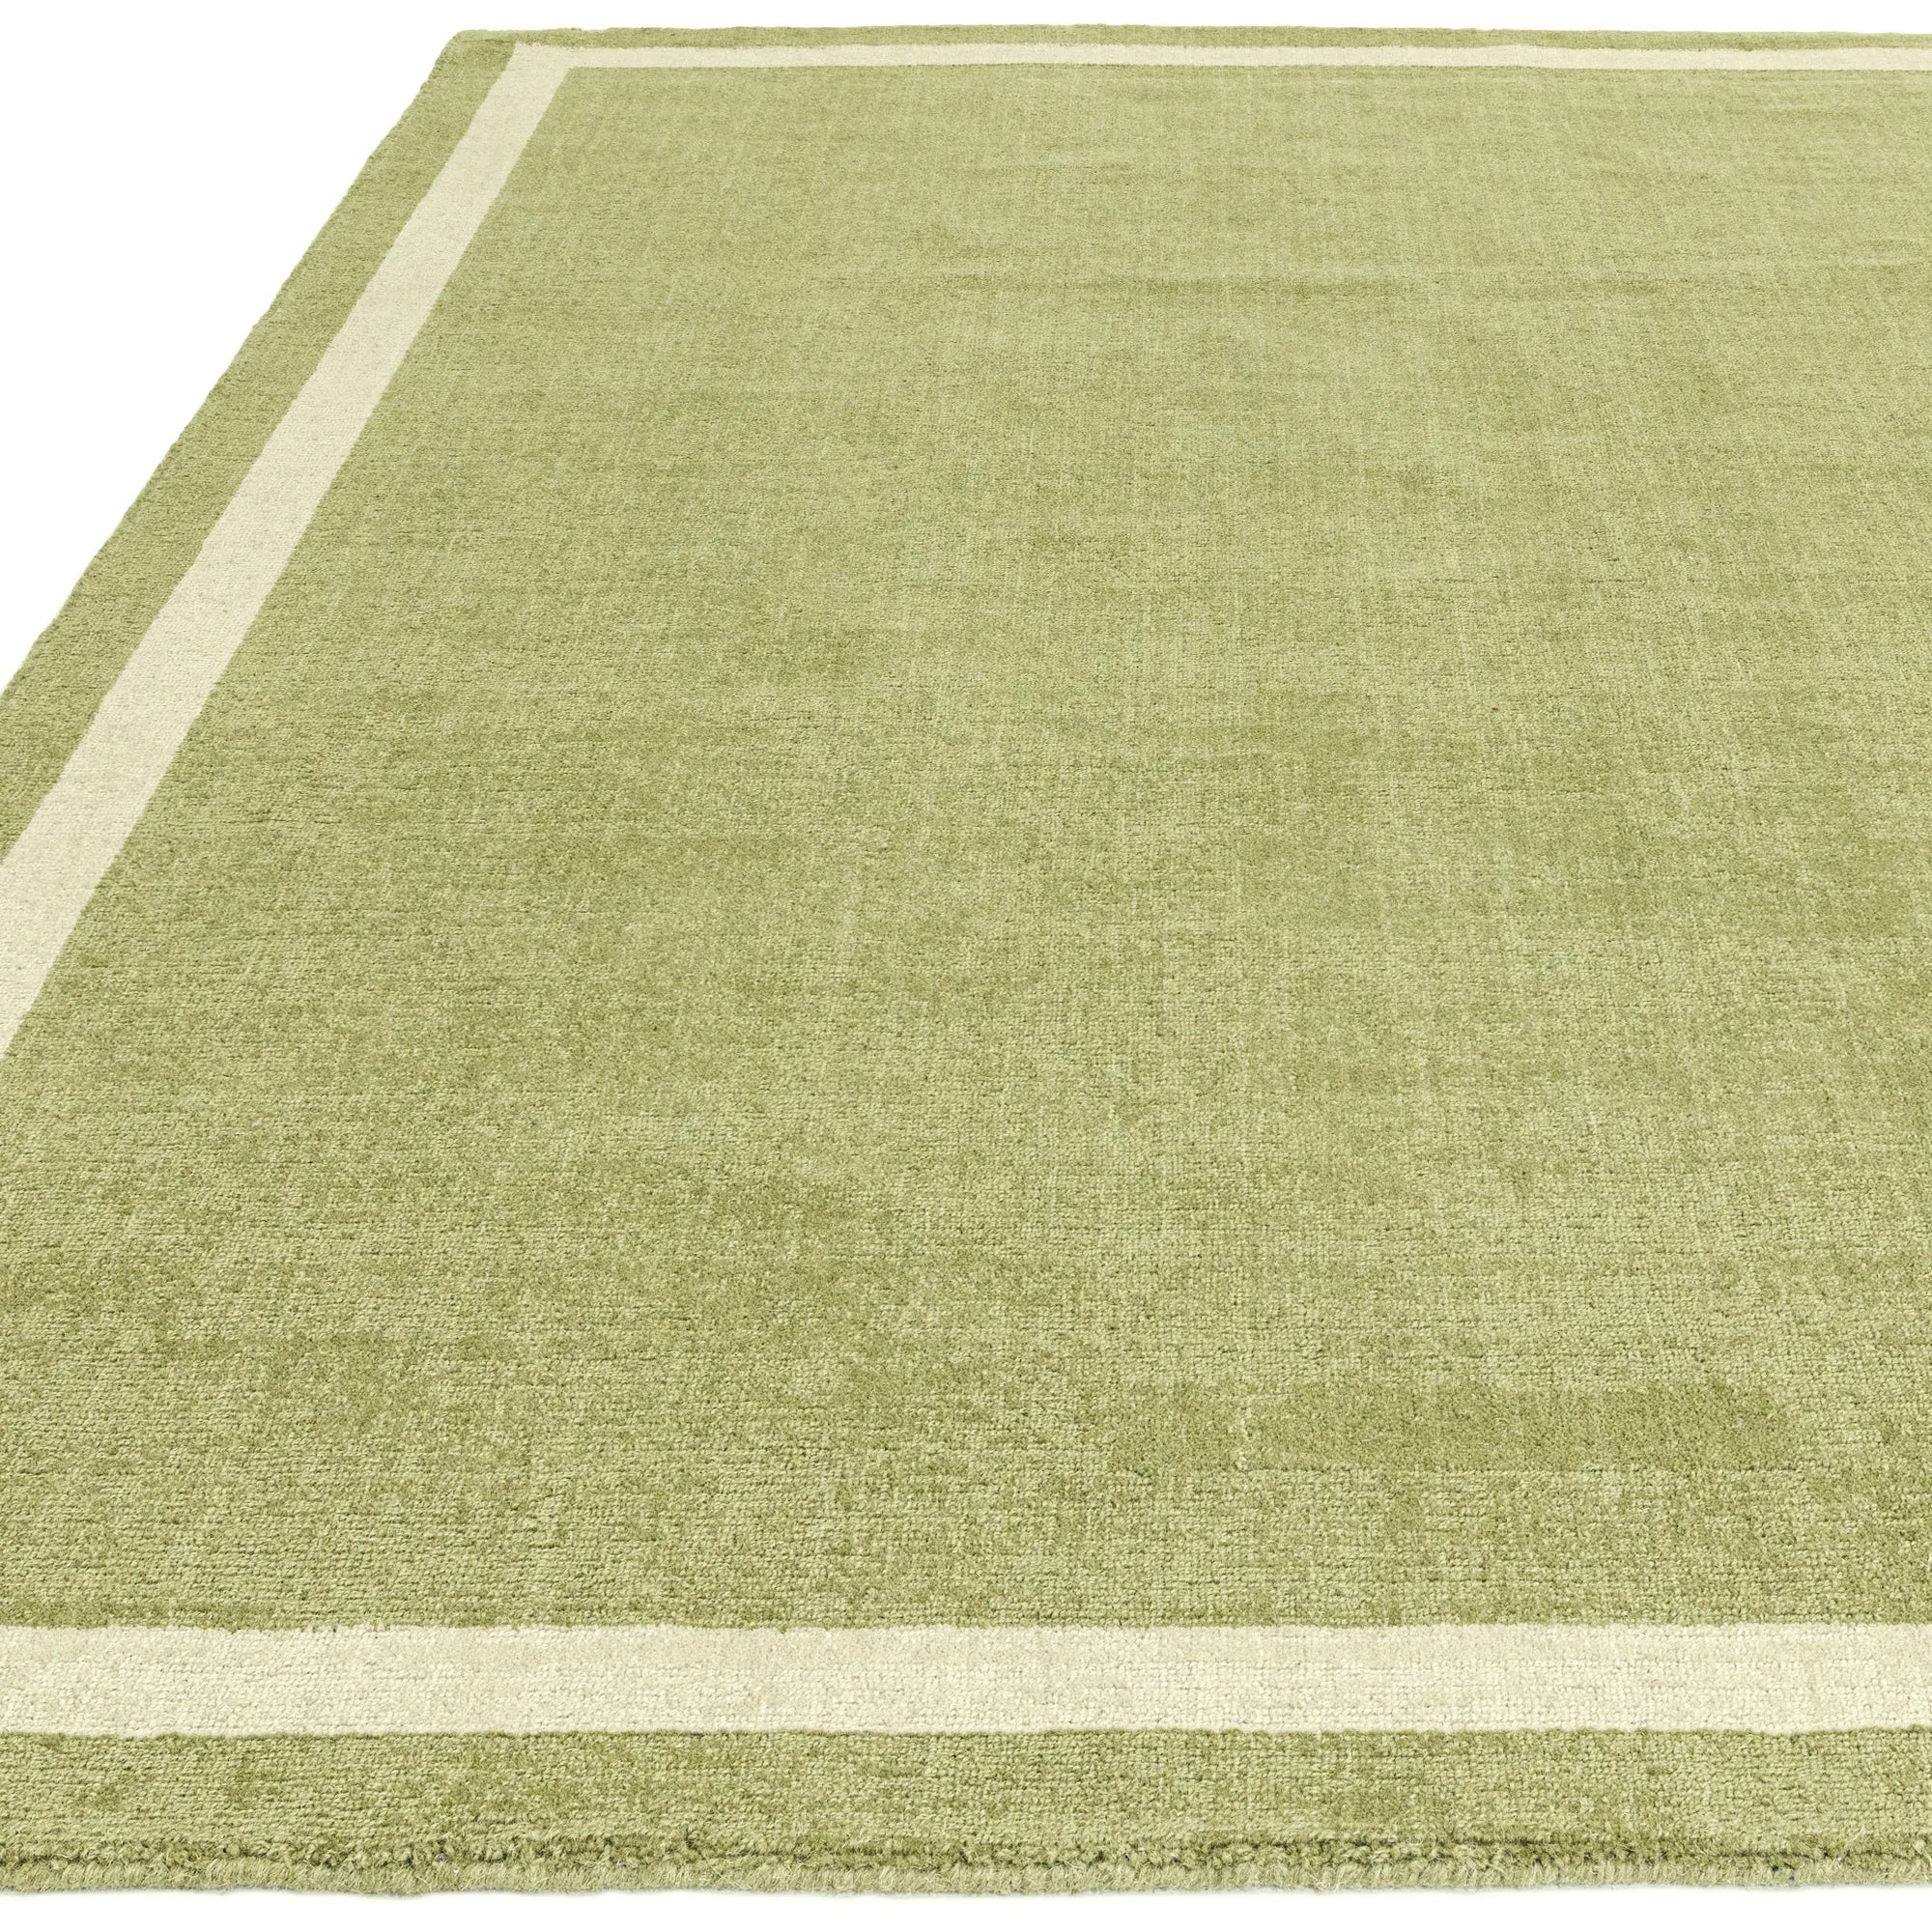 Modern green border style rug